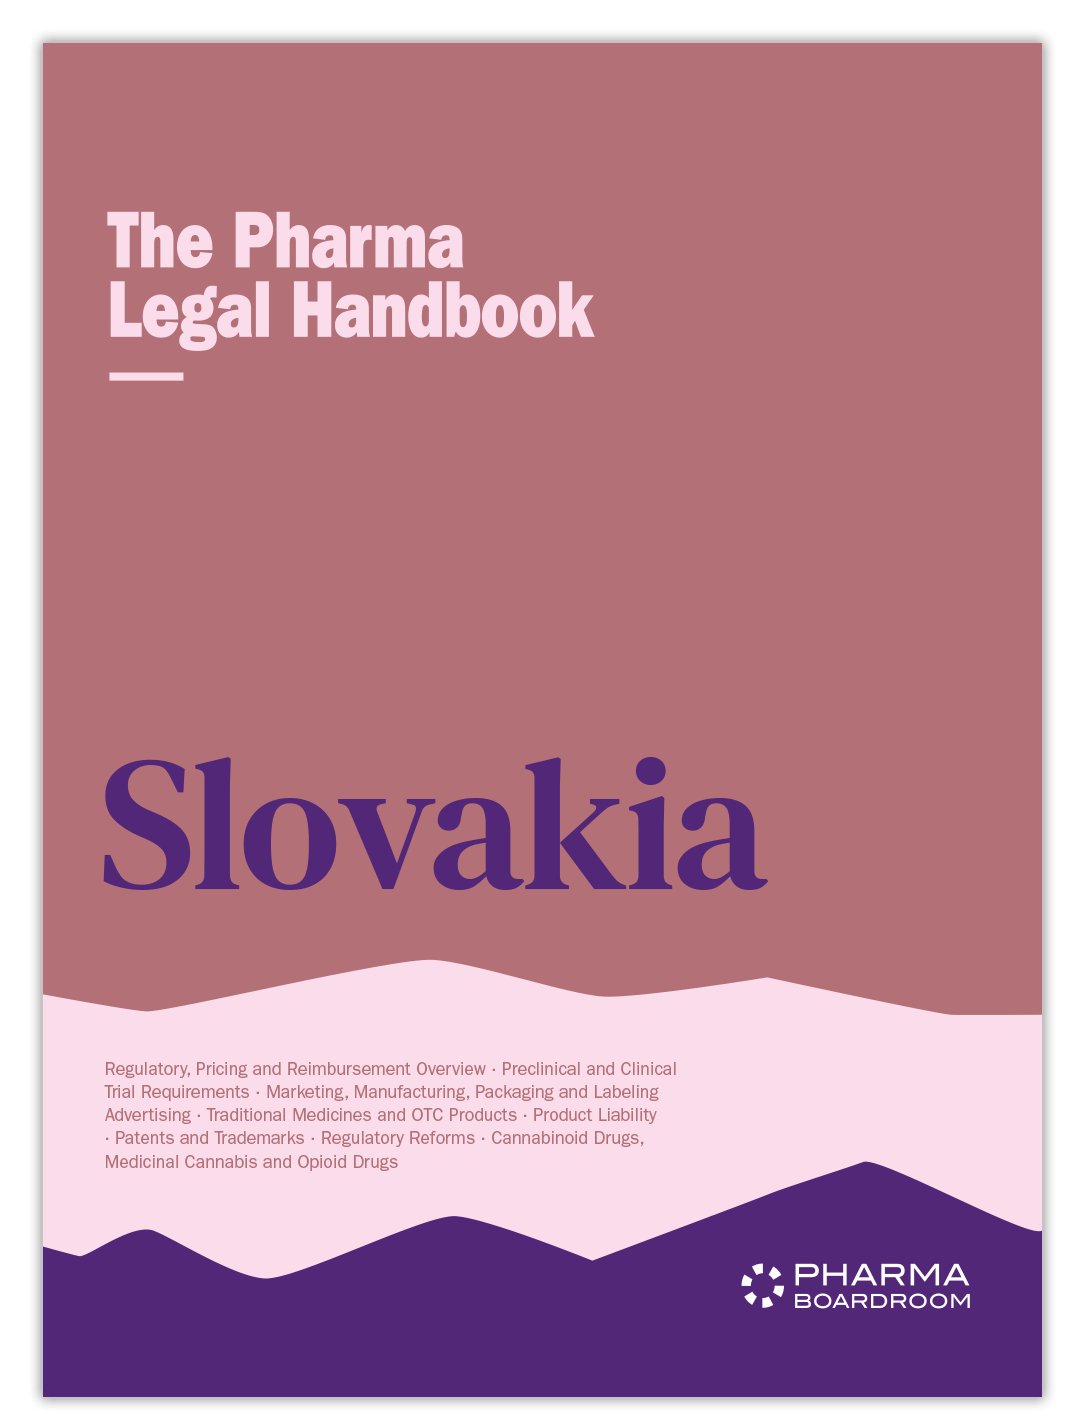 The Pharma Legal Handbook: Slovakia